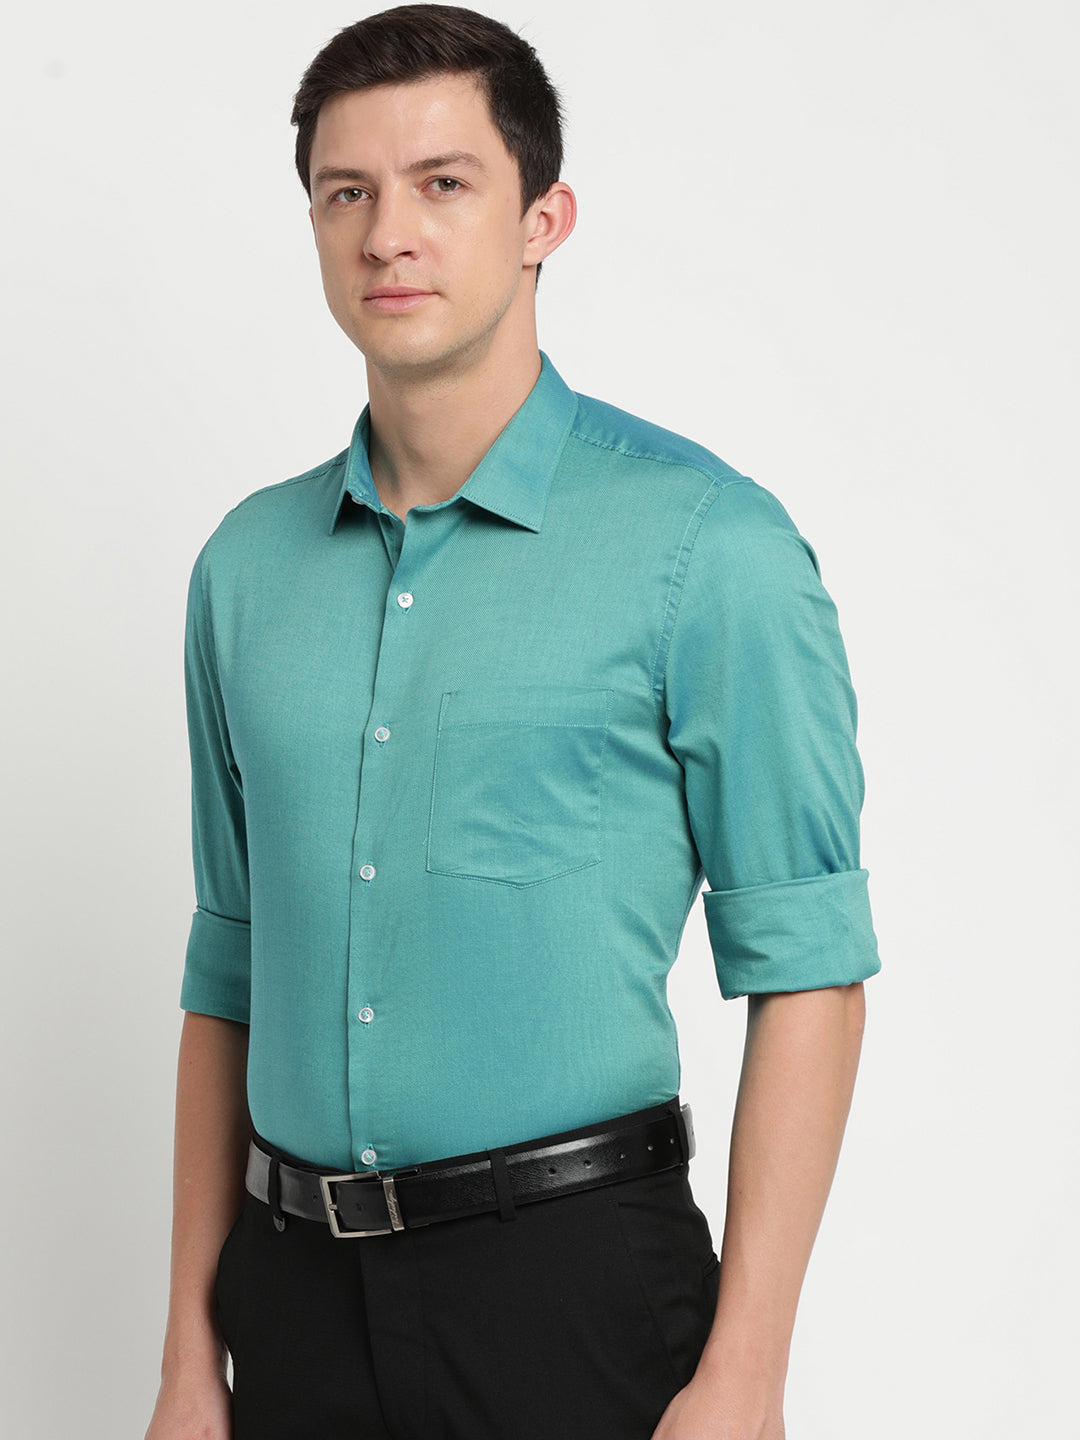 100% Cotton Teal Dobby Slim Fit Full Sleeve Formal Shirt